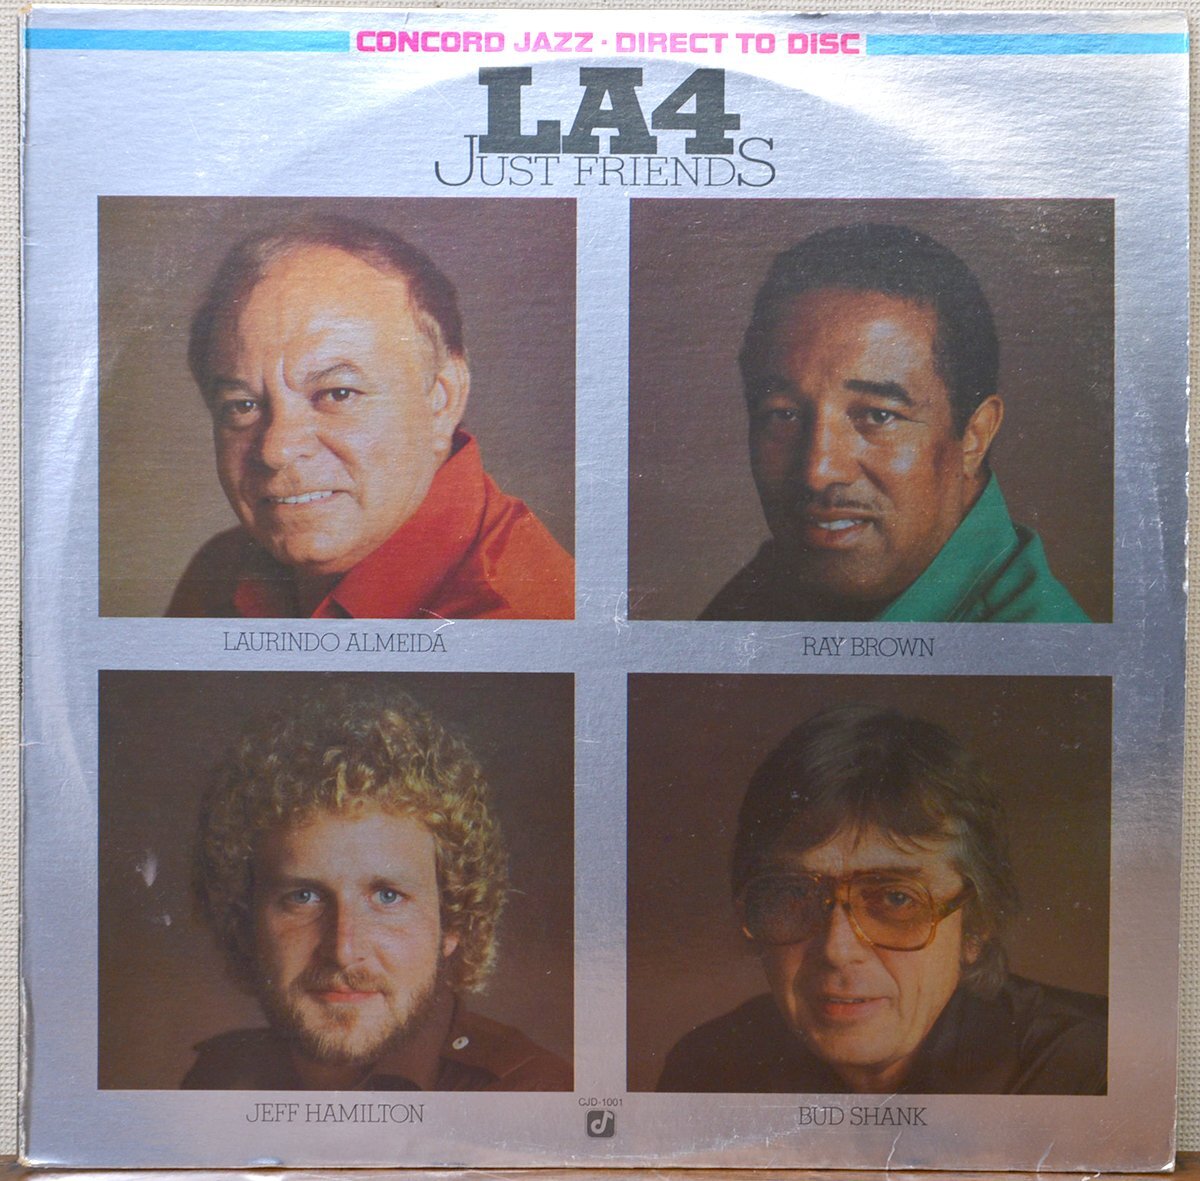 LA4 / JUST FRIENDS CONCORD JAZZ CJD-1001 US盤 LPレコード